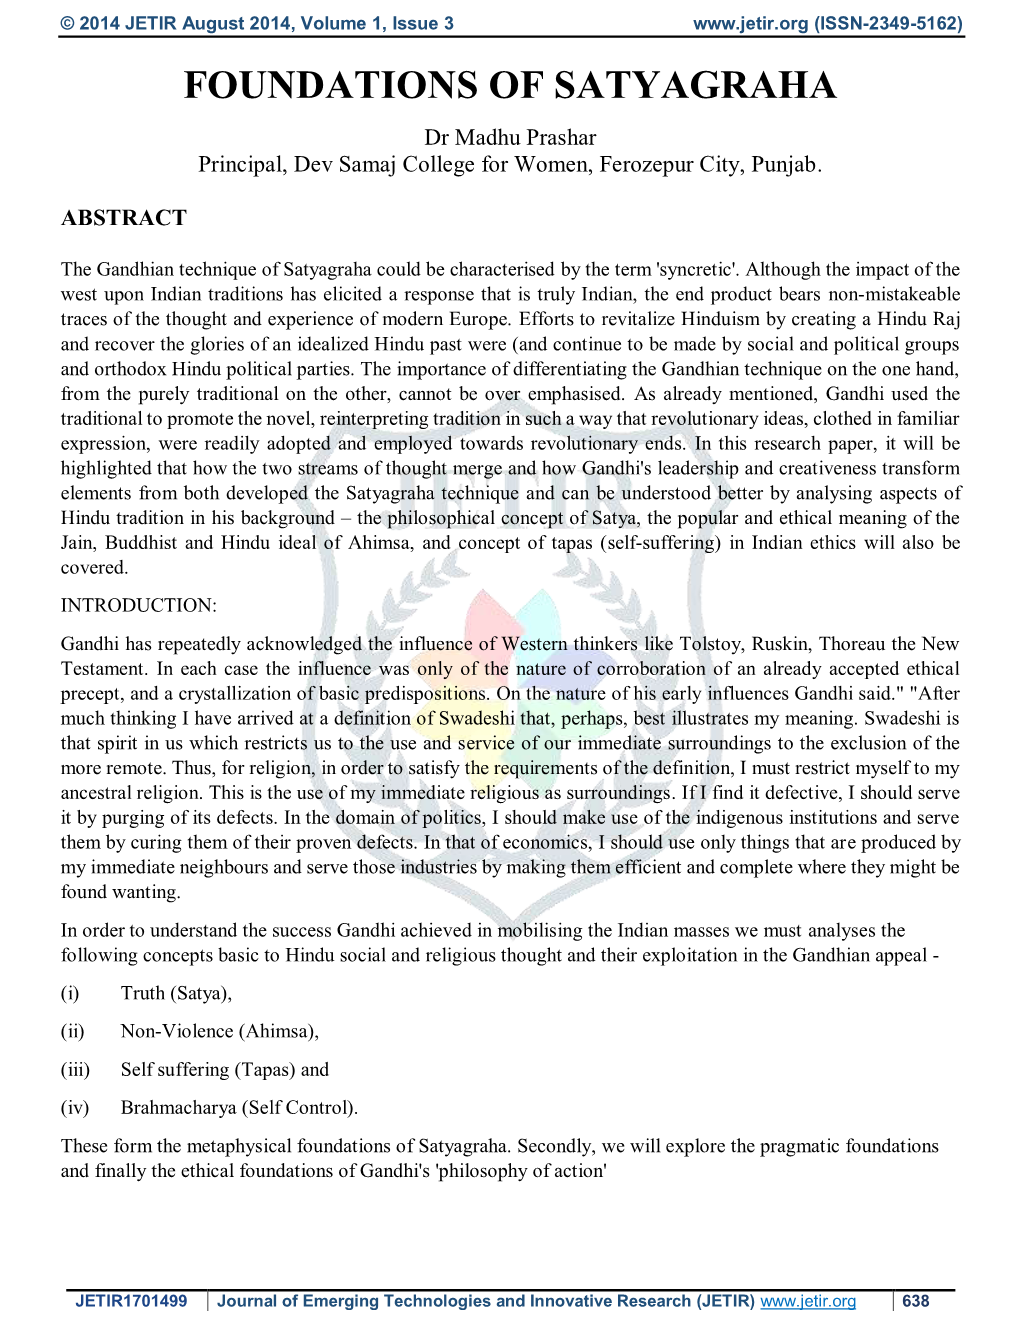 FOUNDATIONS of SATYAGRAHA Dr Madhu Prashar Principal, Dev Samaj College for Women, Ferozepur City, Punjab